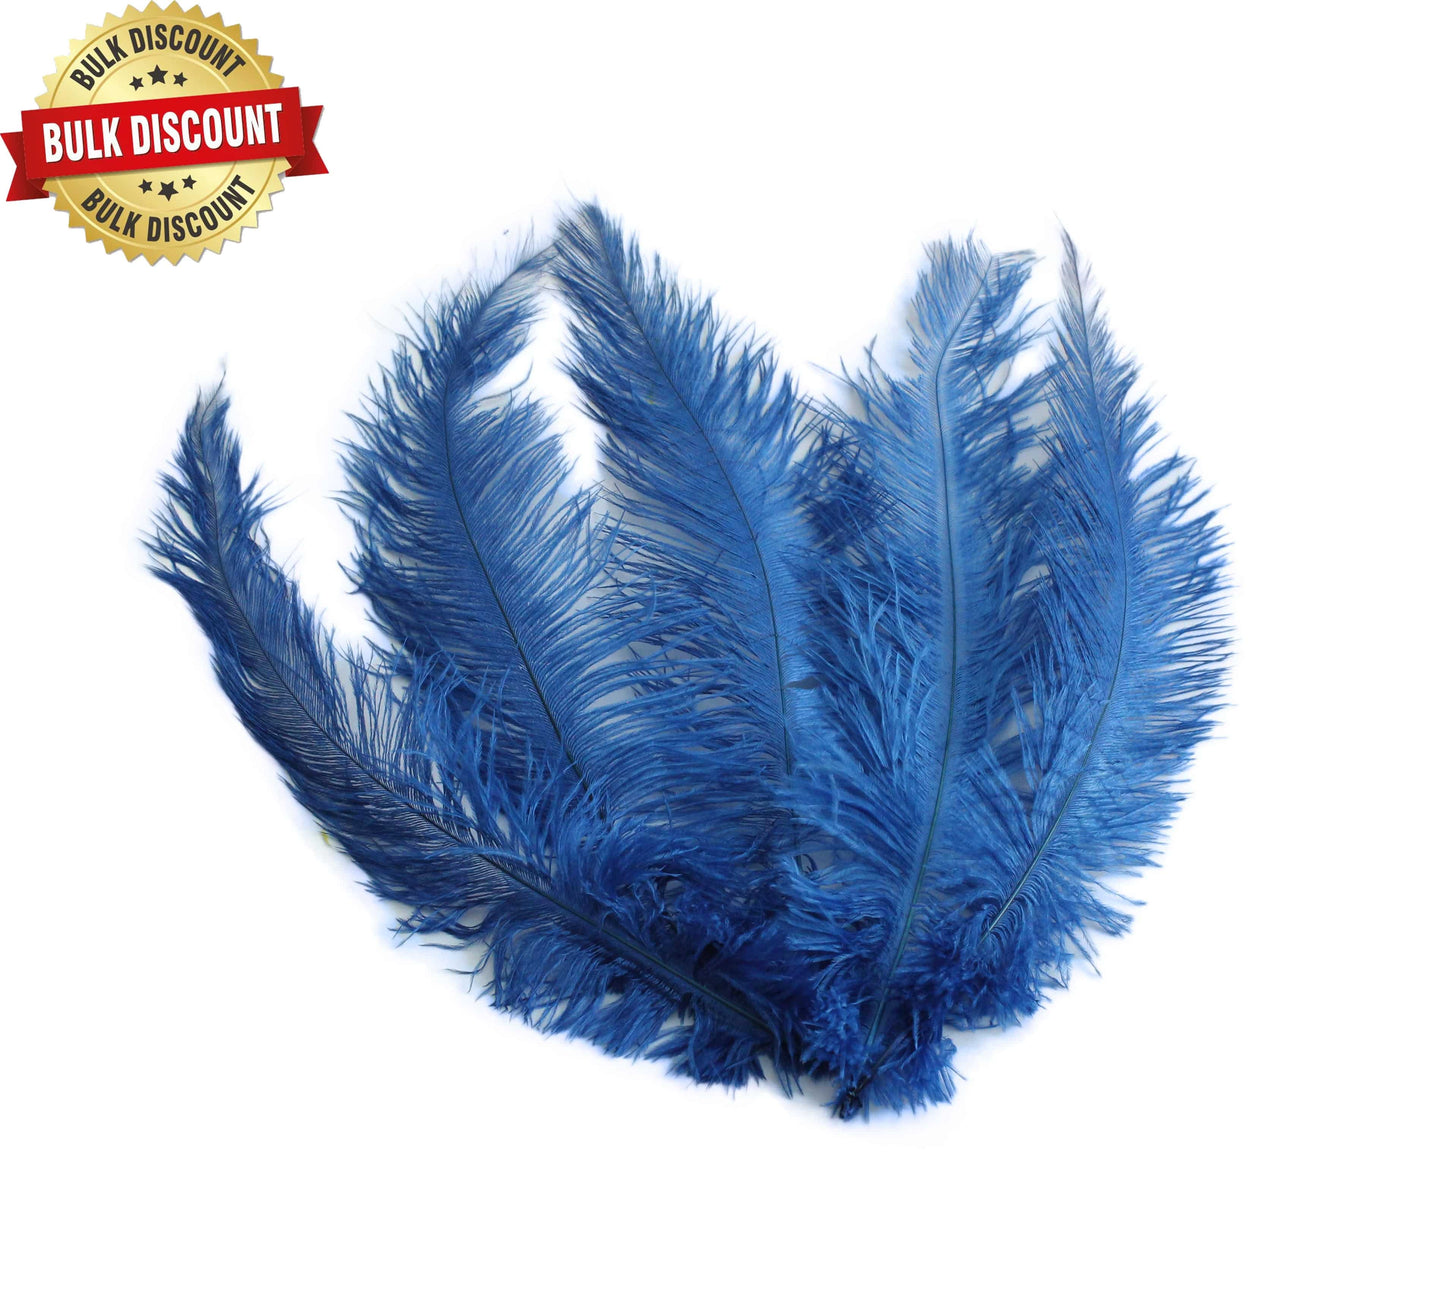 BULK 1/4lb Ostrich Feather Spad Plumes 12-16 (Royal Blue) for Sale Online